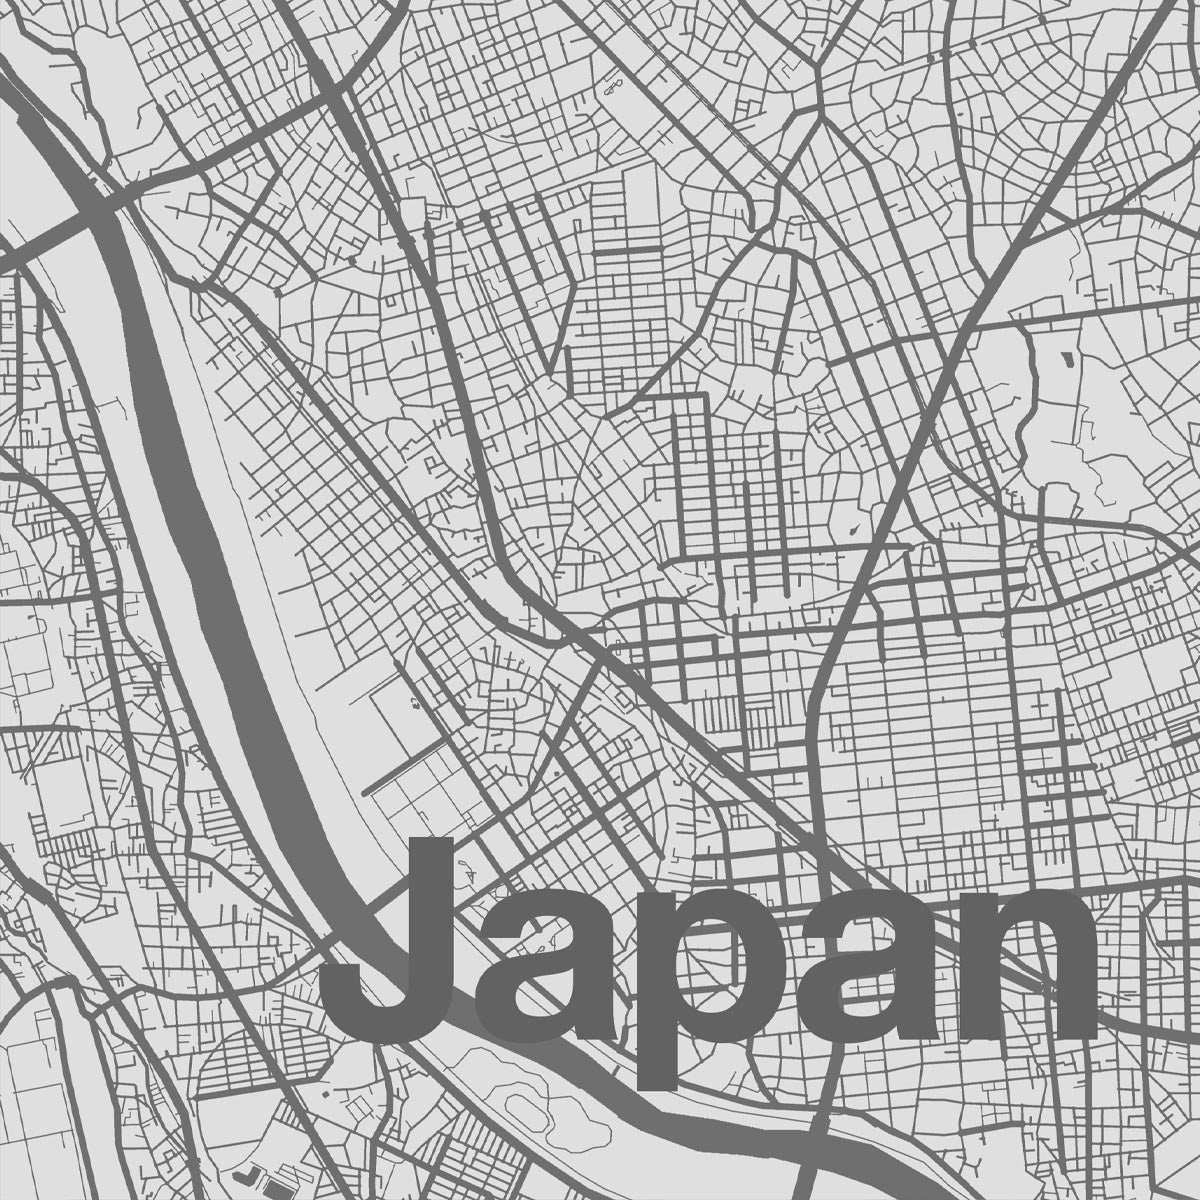 Tokyo Map by Florent Bodart